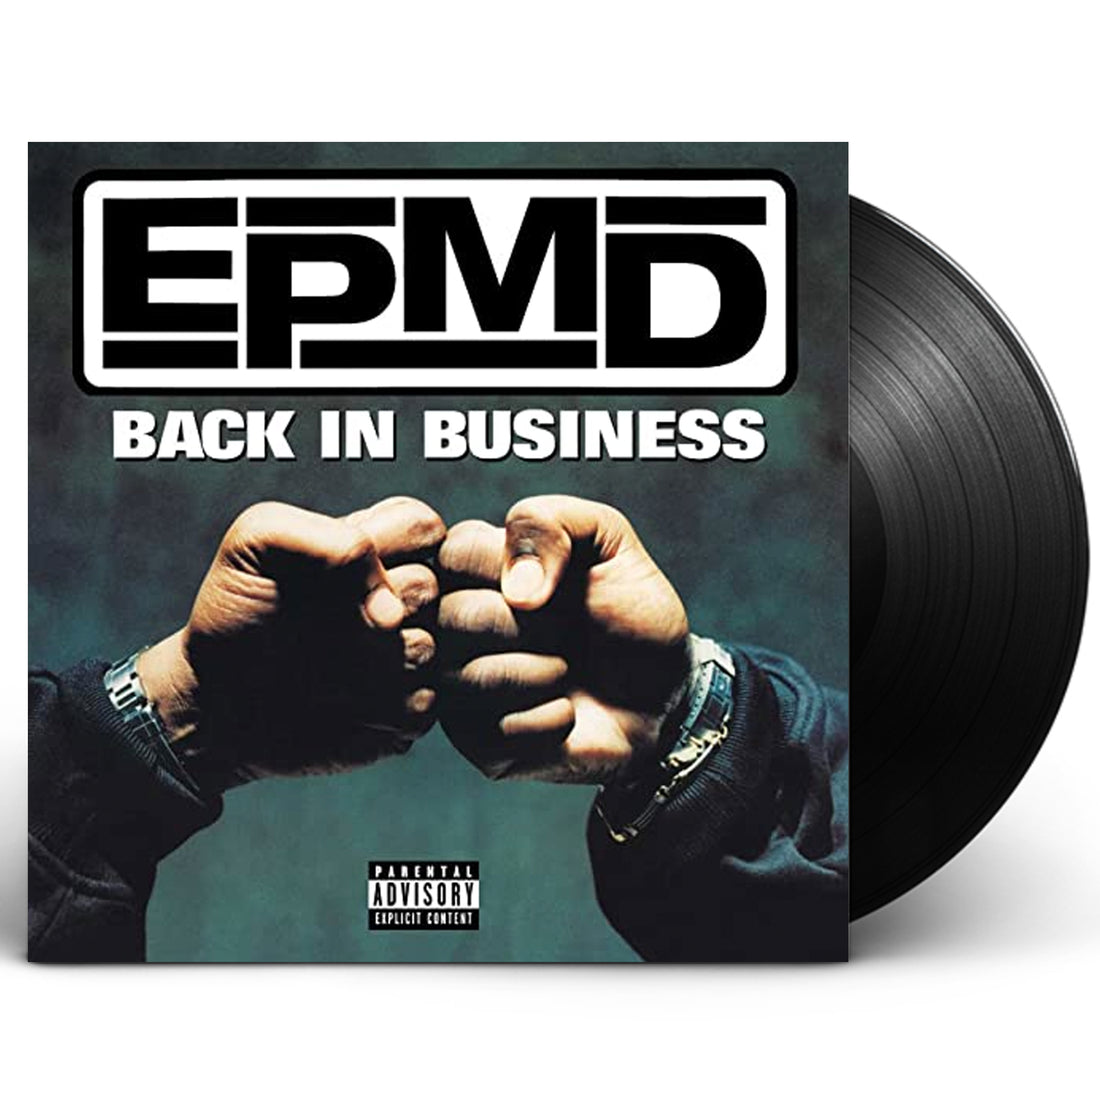 EPMD "Back In Business" 2xLP Vinyl